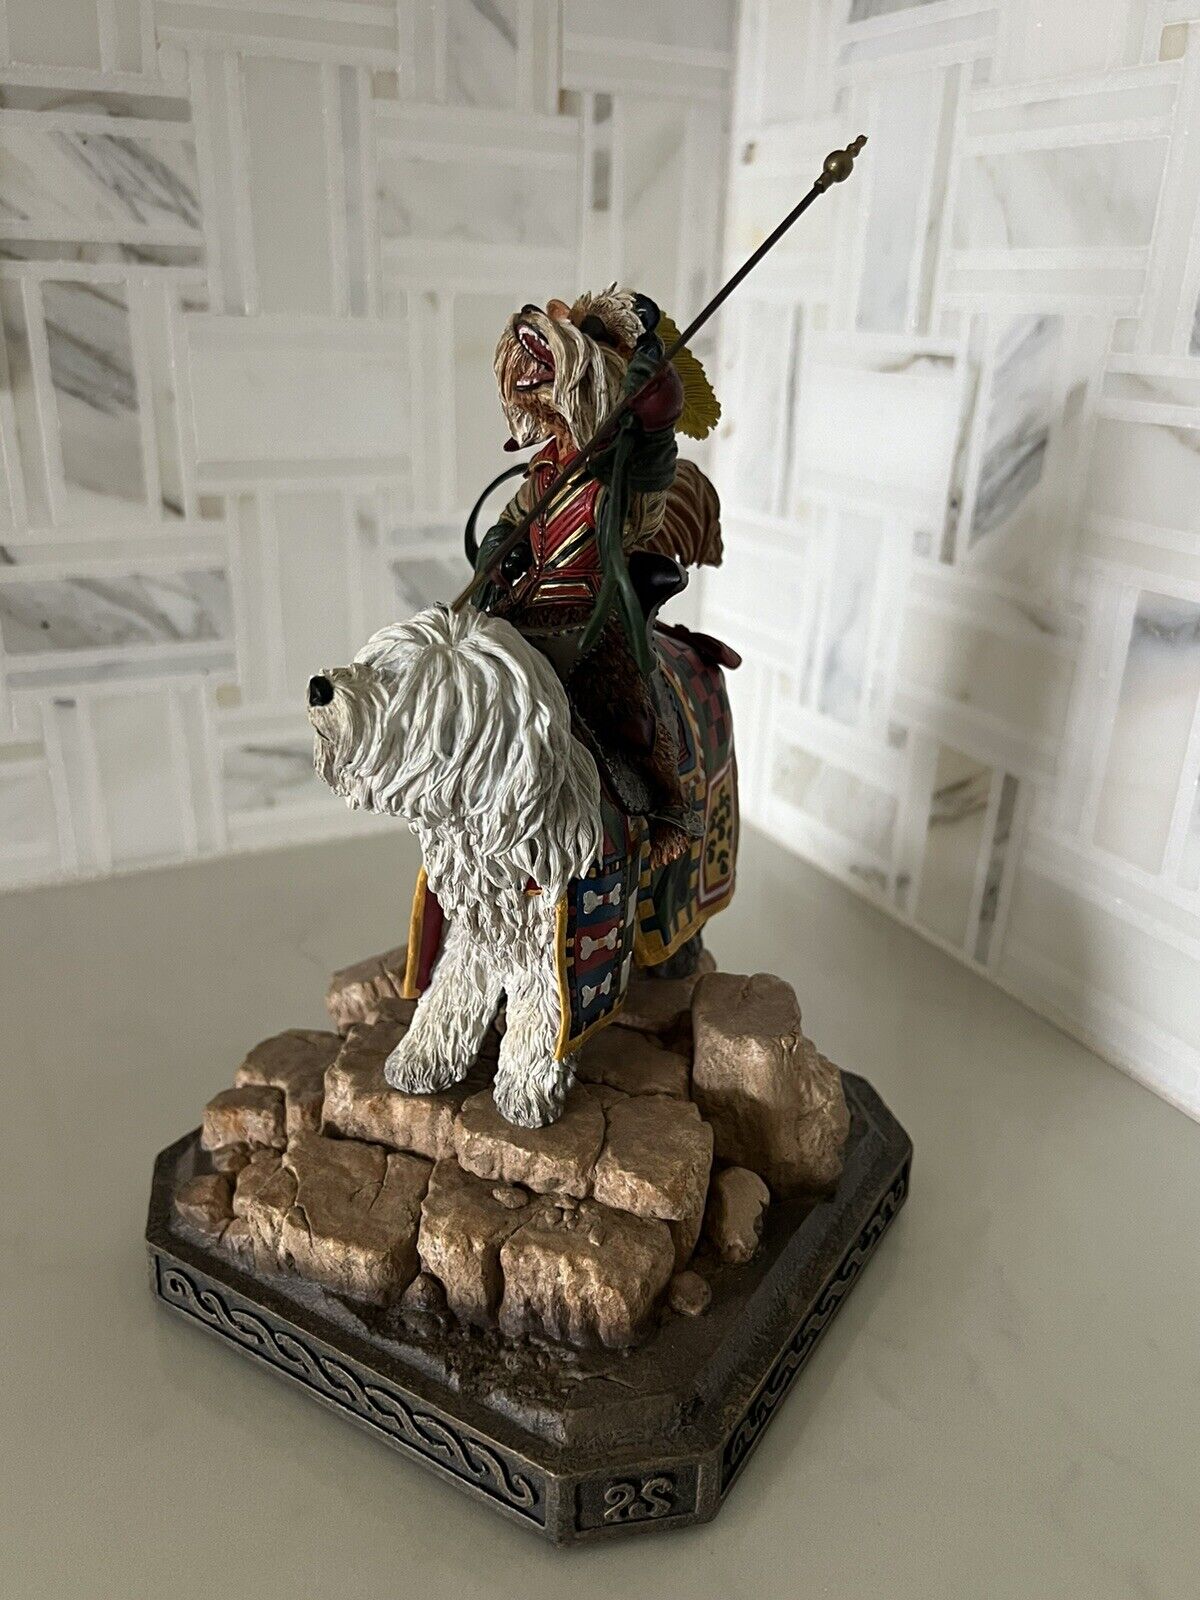 WETA Workshop Labyrinth Sir Didymus & Ambrosius Statue - #331 out of 700